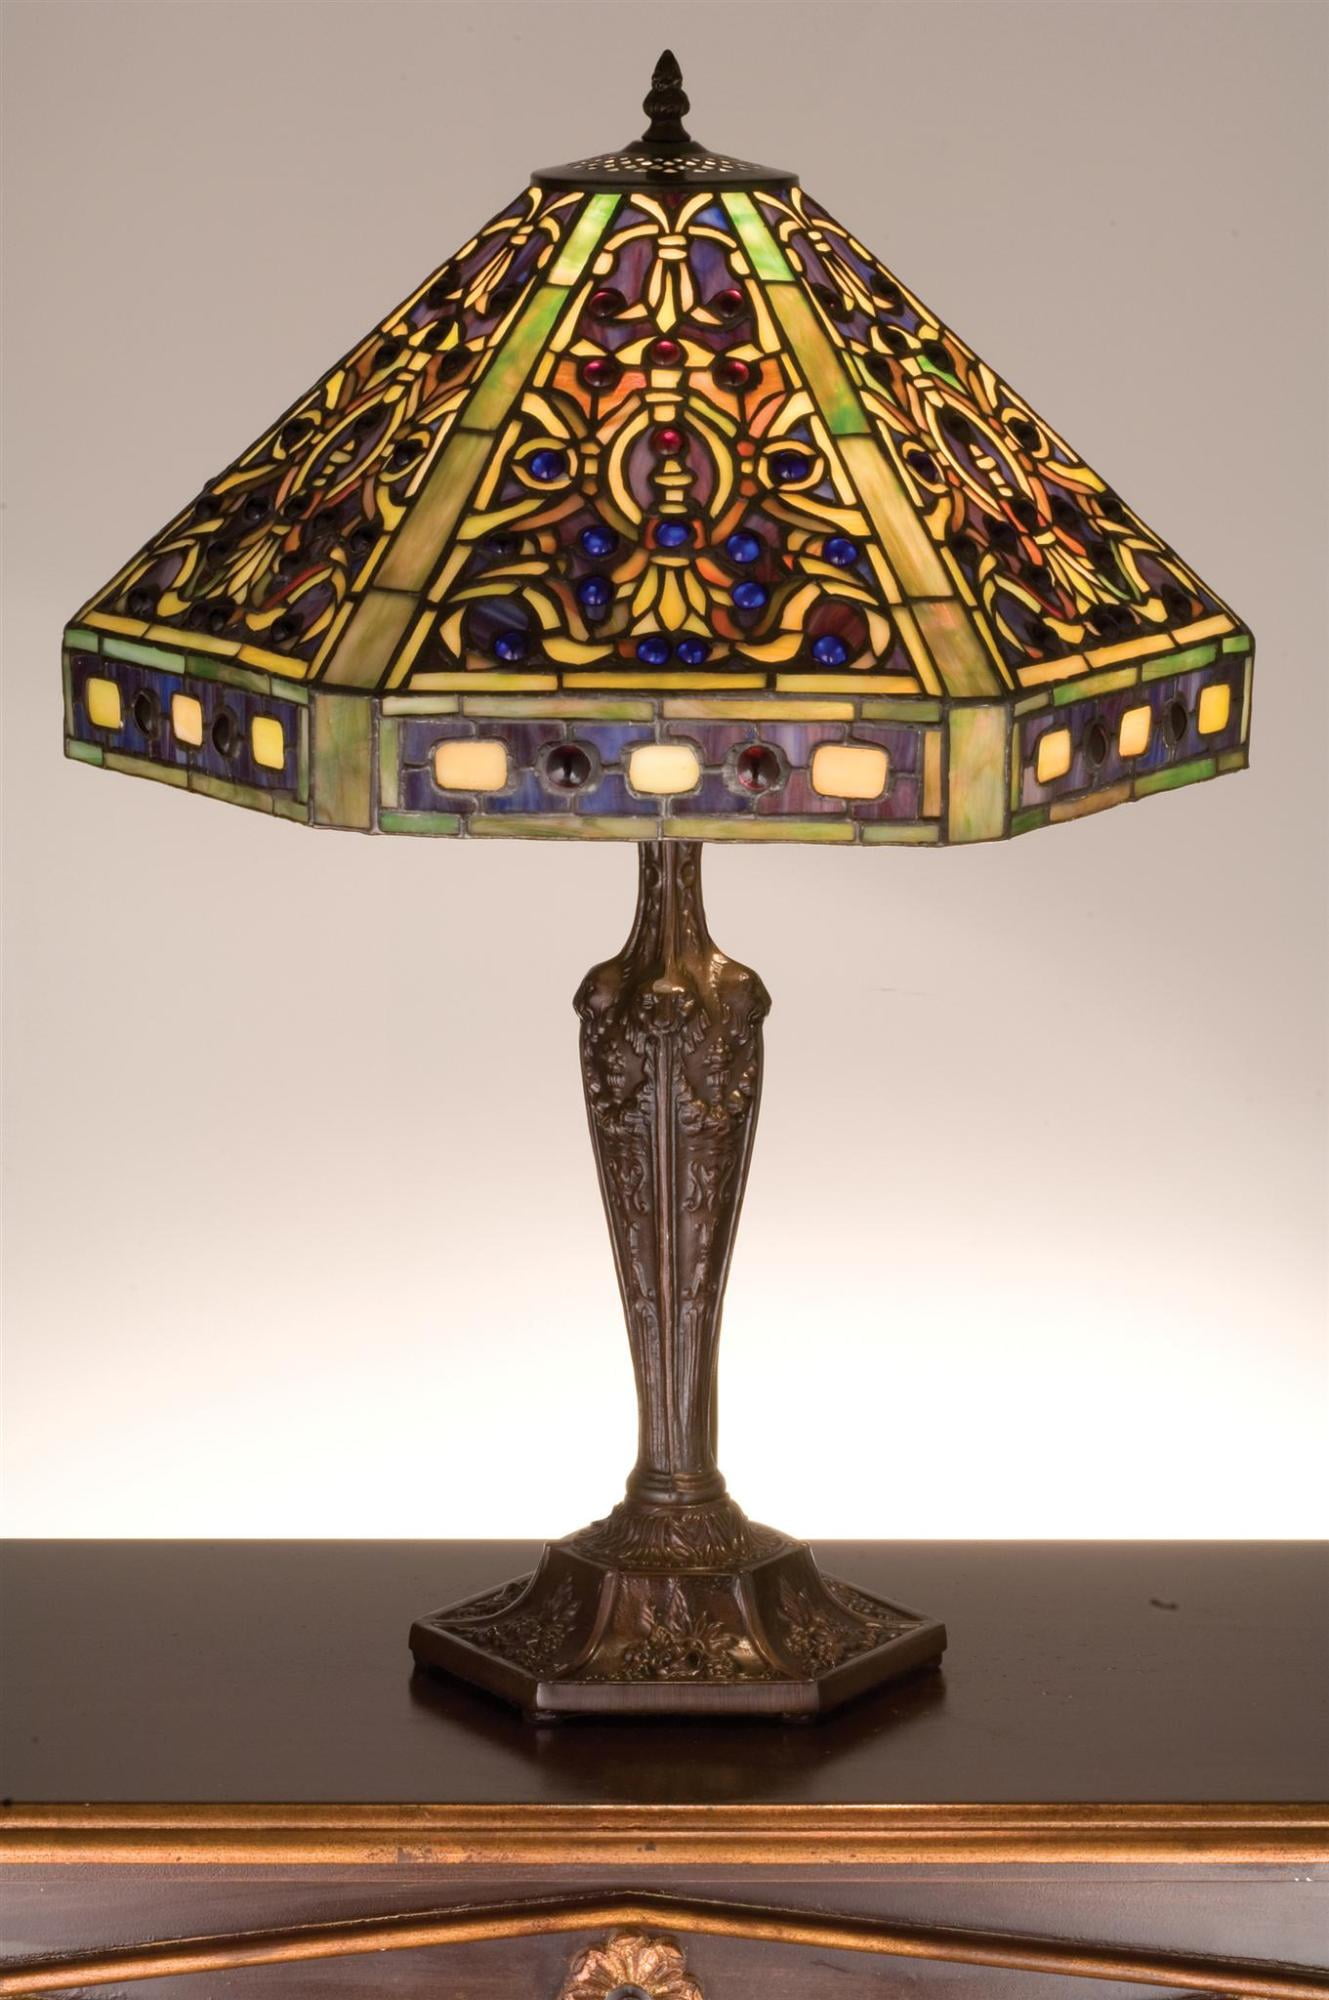 23.5"H Tiffany Elizabethan Table Lamp